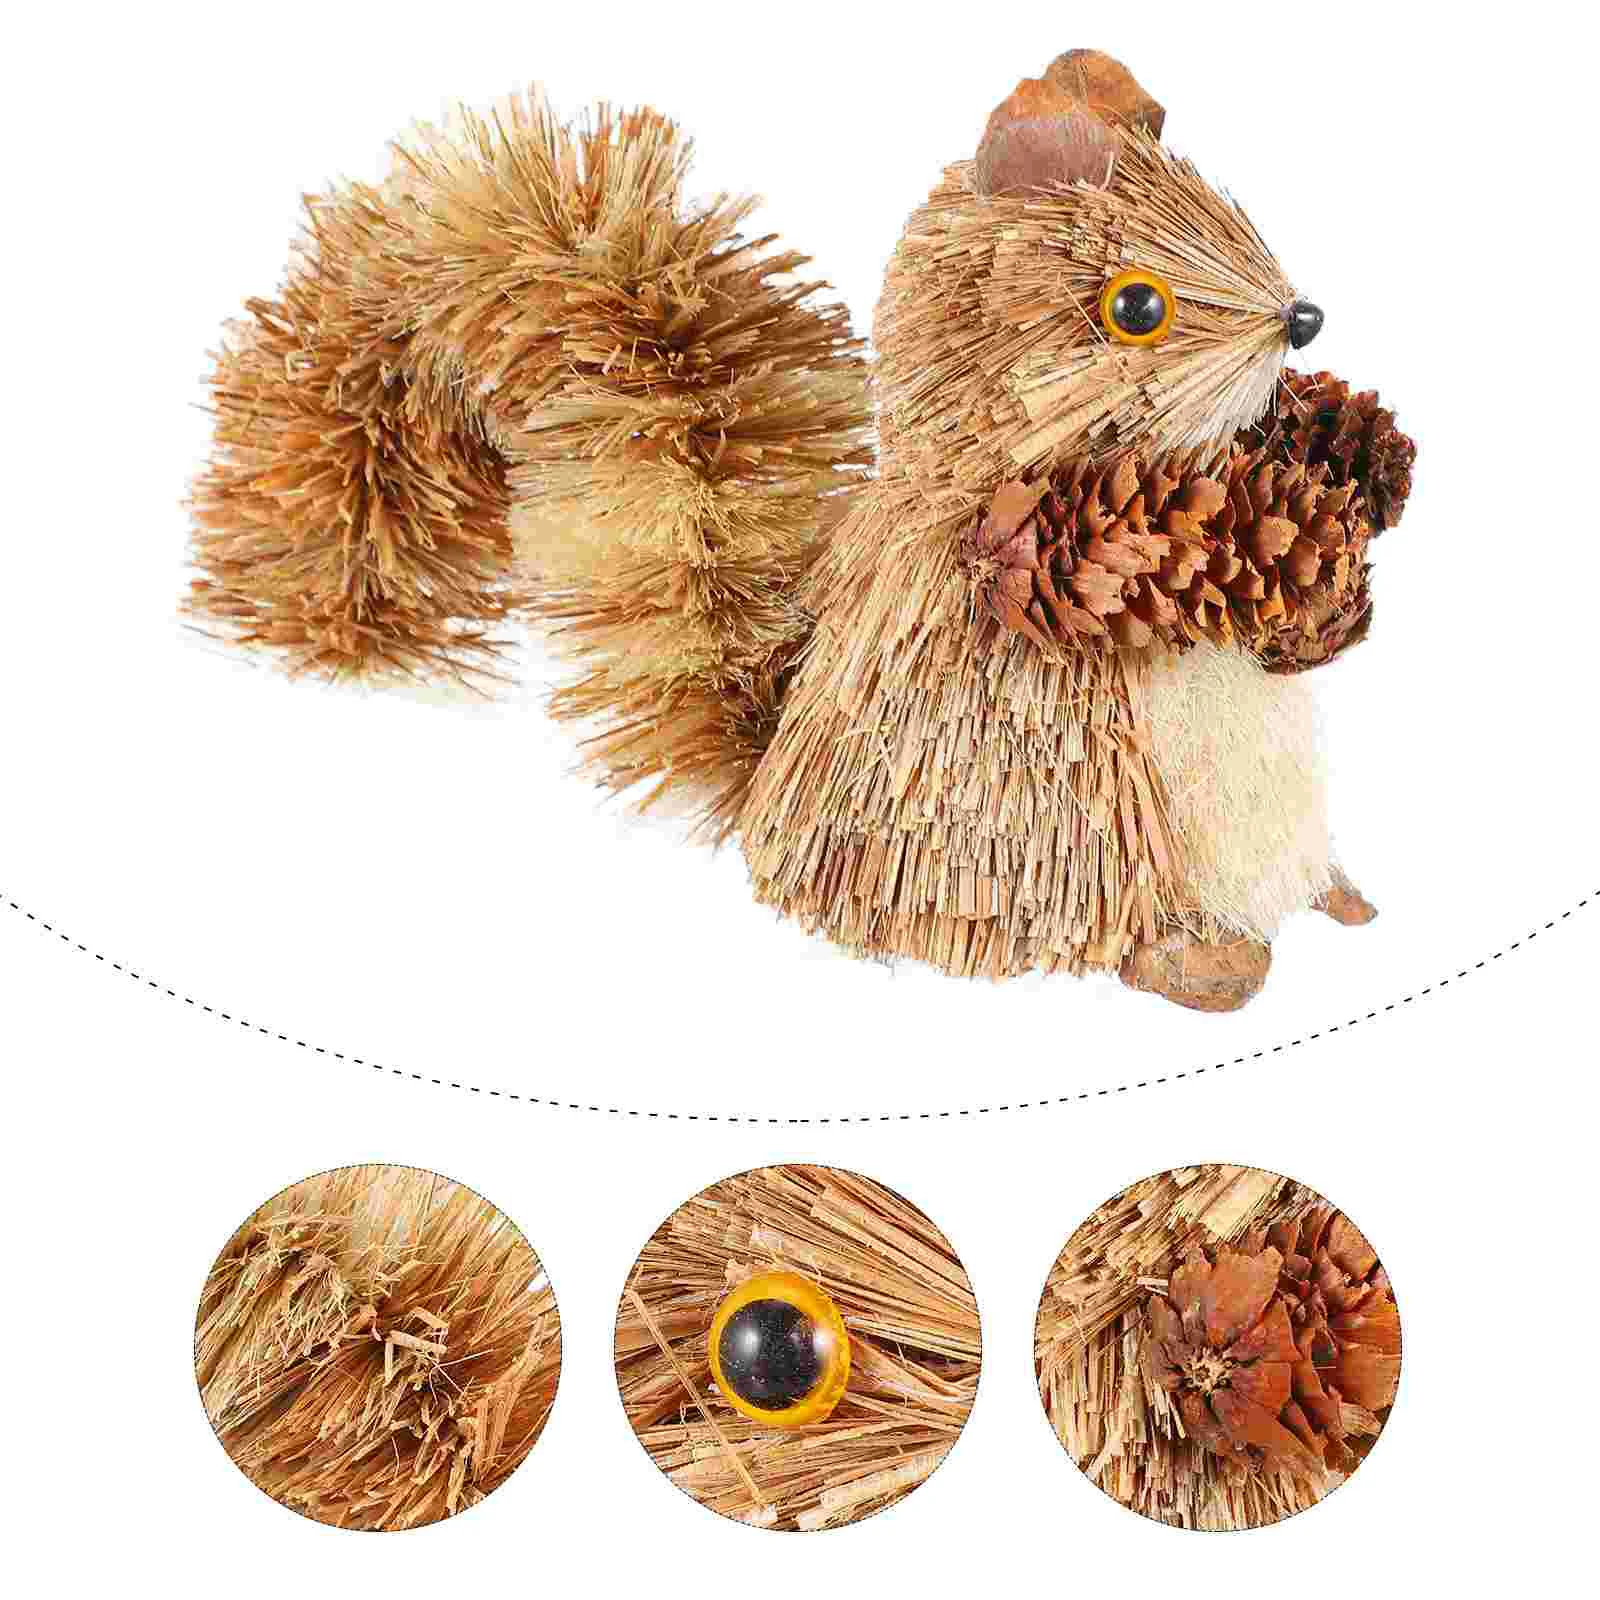 

Christmas Squirrel Ornaments Landscape Miniture Decoration DIY Woven Artware Scene Figurine Wooden Tree Decorations